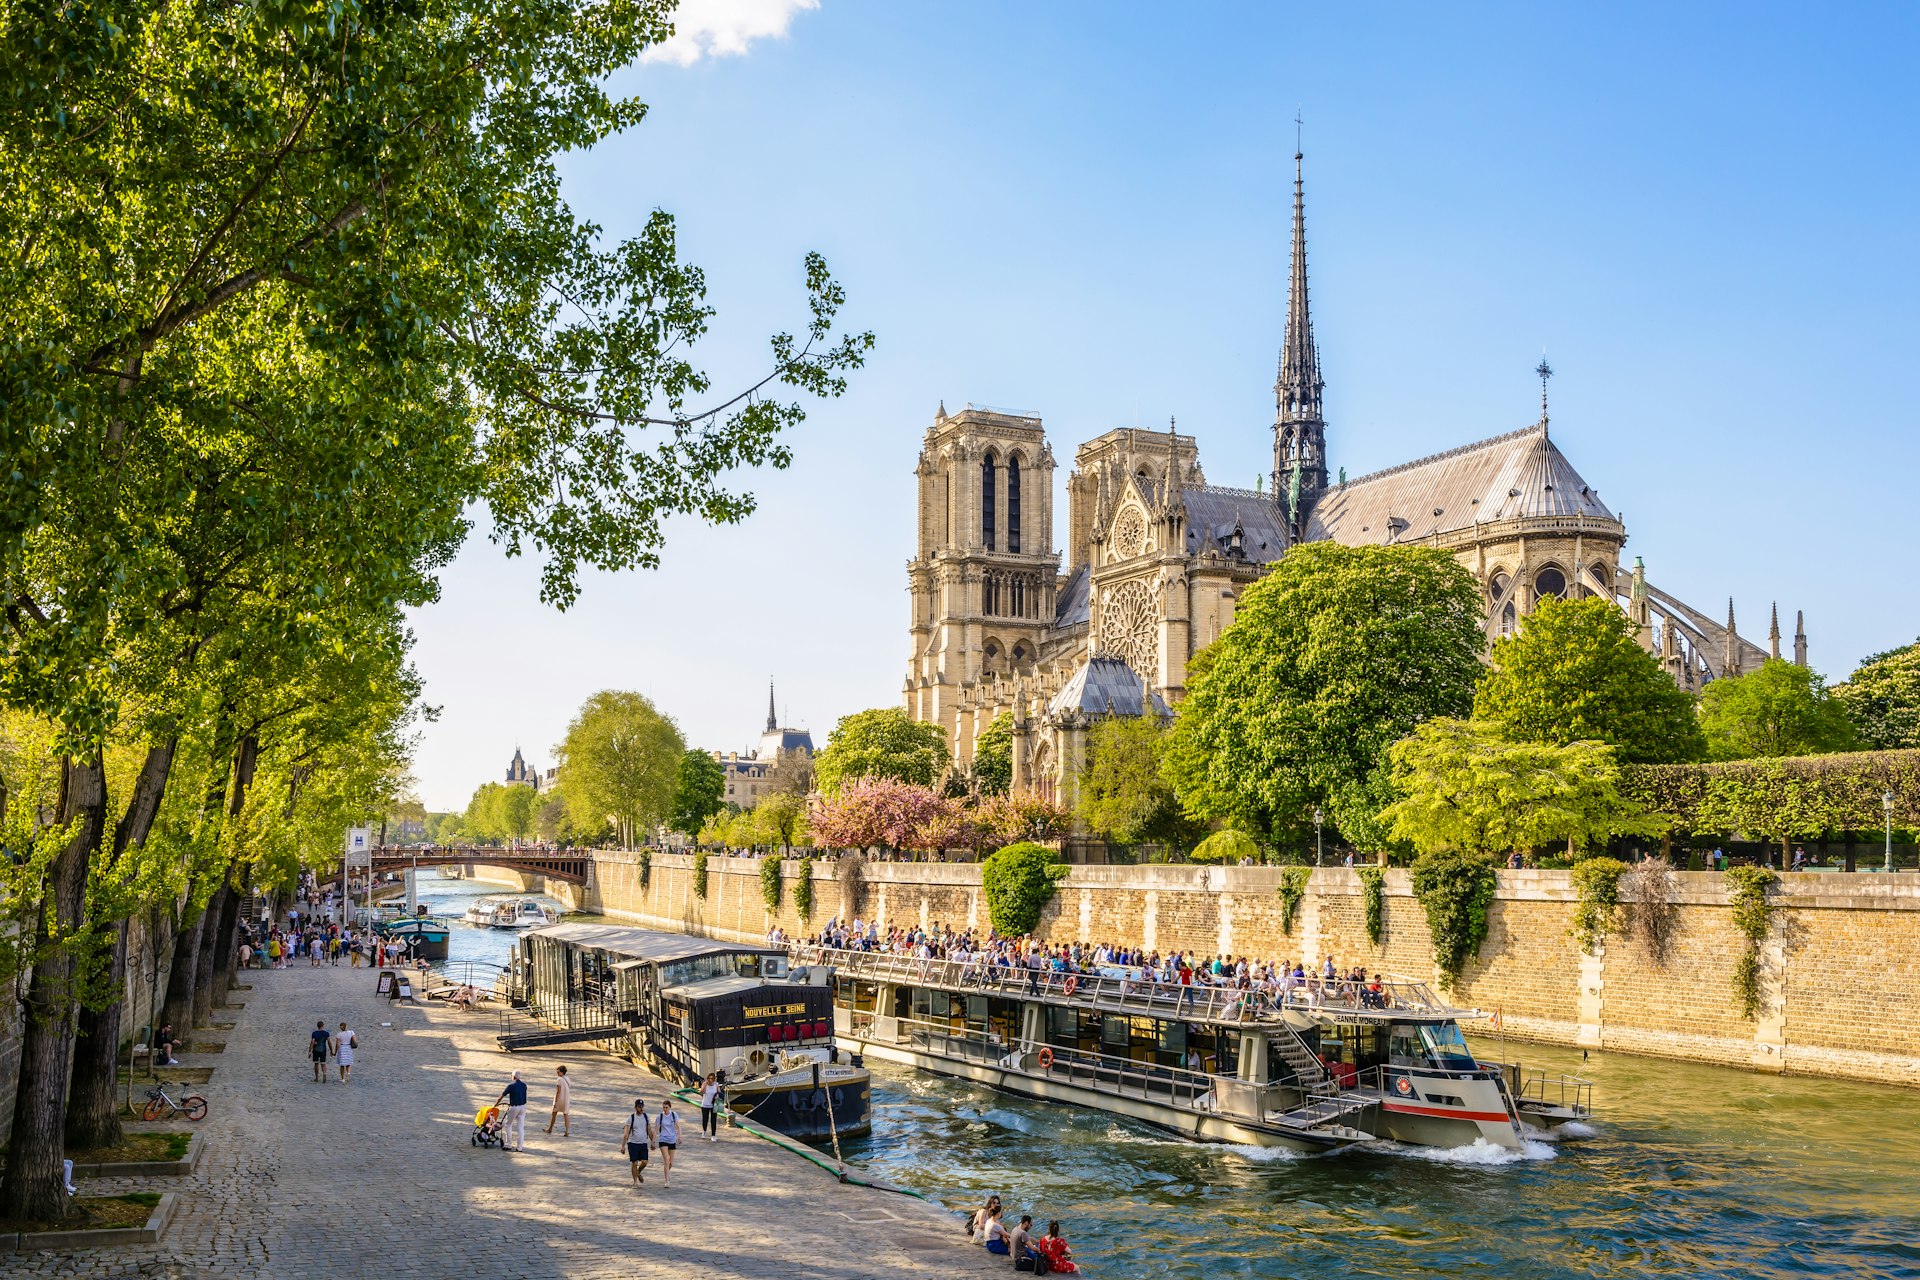 Seine in front of Notre-Dame de Paris cathedral ©olrat/Shutterstock